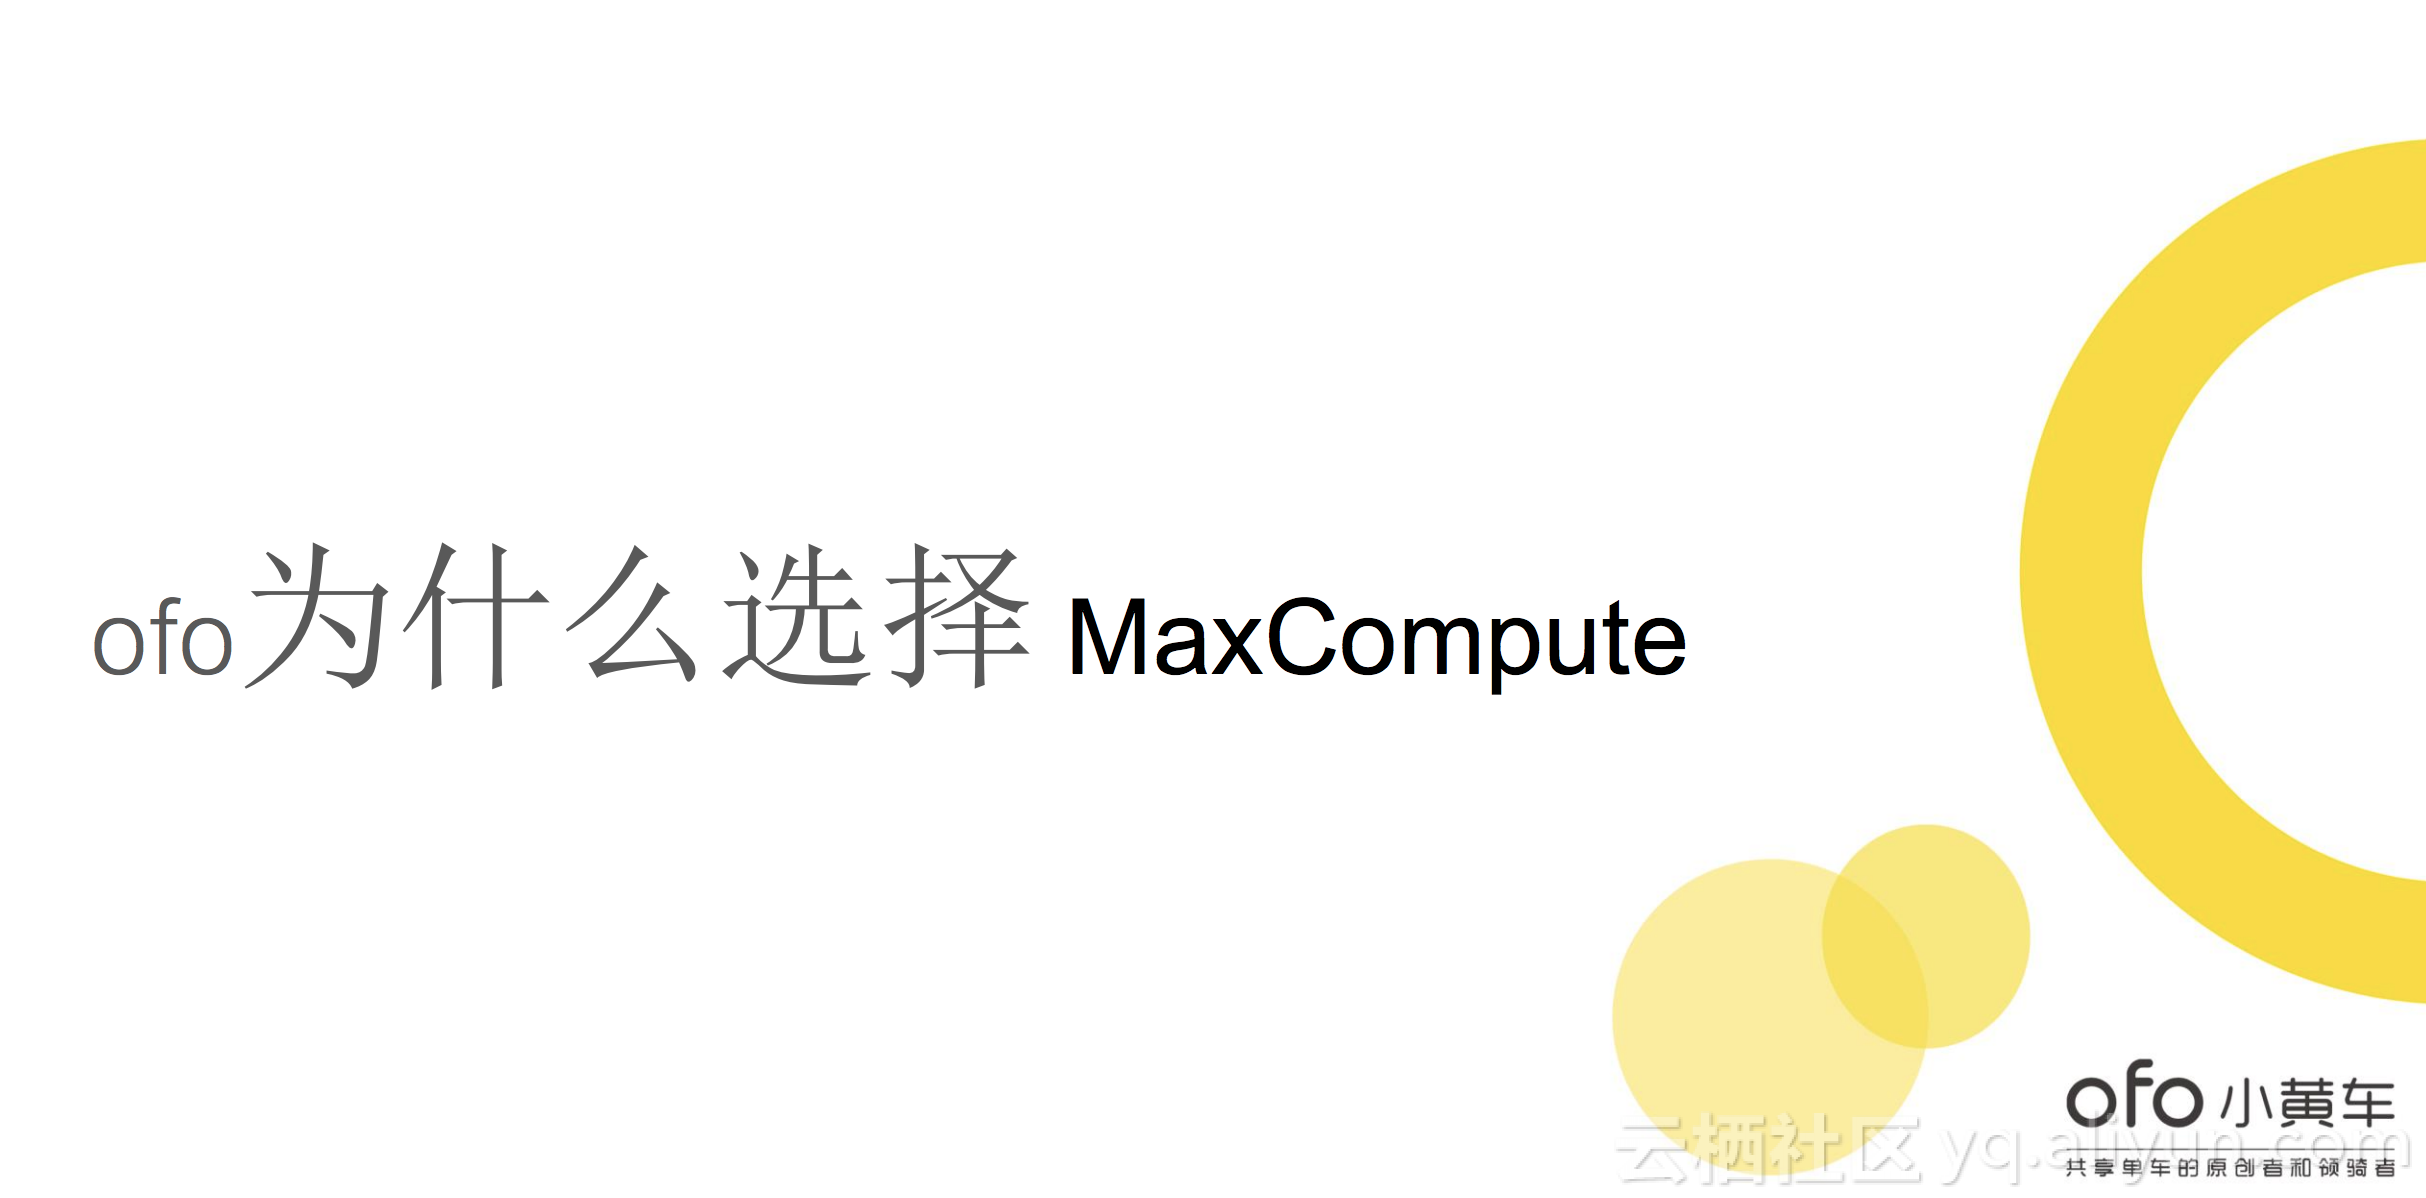 ofo在MaxCompute的大数据开发之路